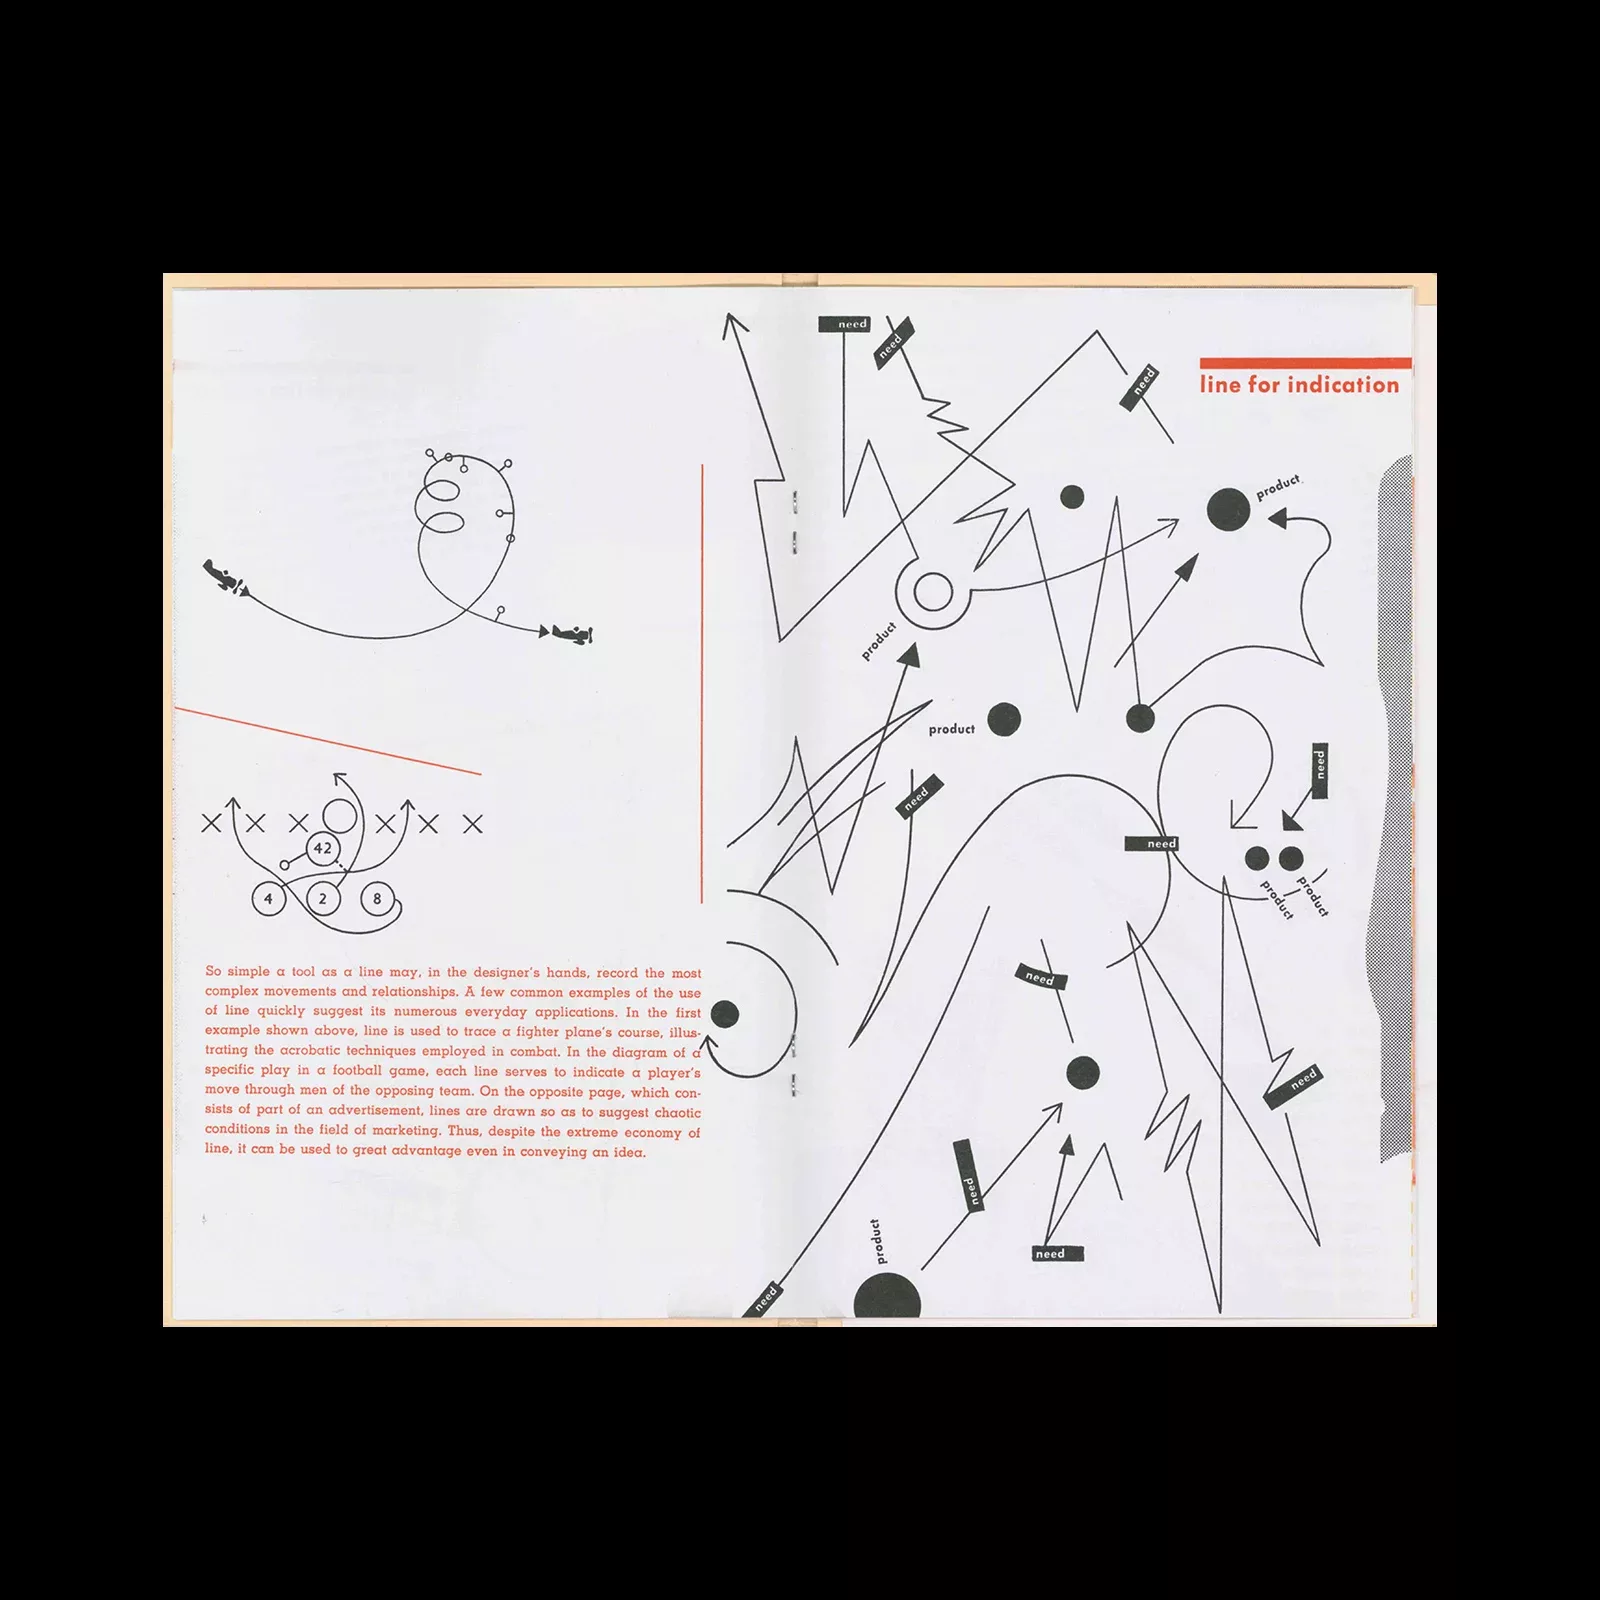 Shape, Line and Color. Design and Paper 19, Ladislav Sutnar, Reprint 2003